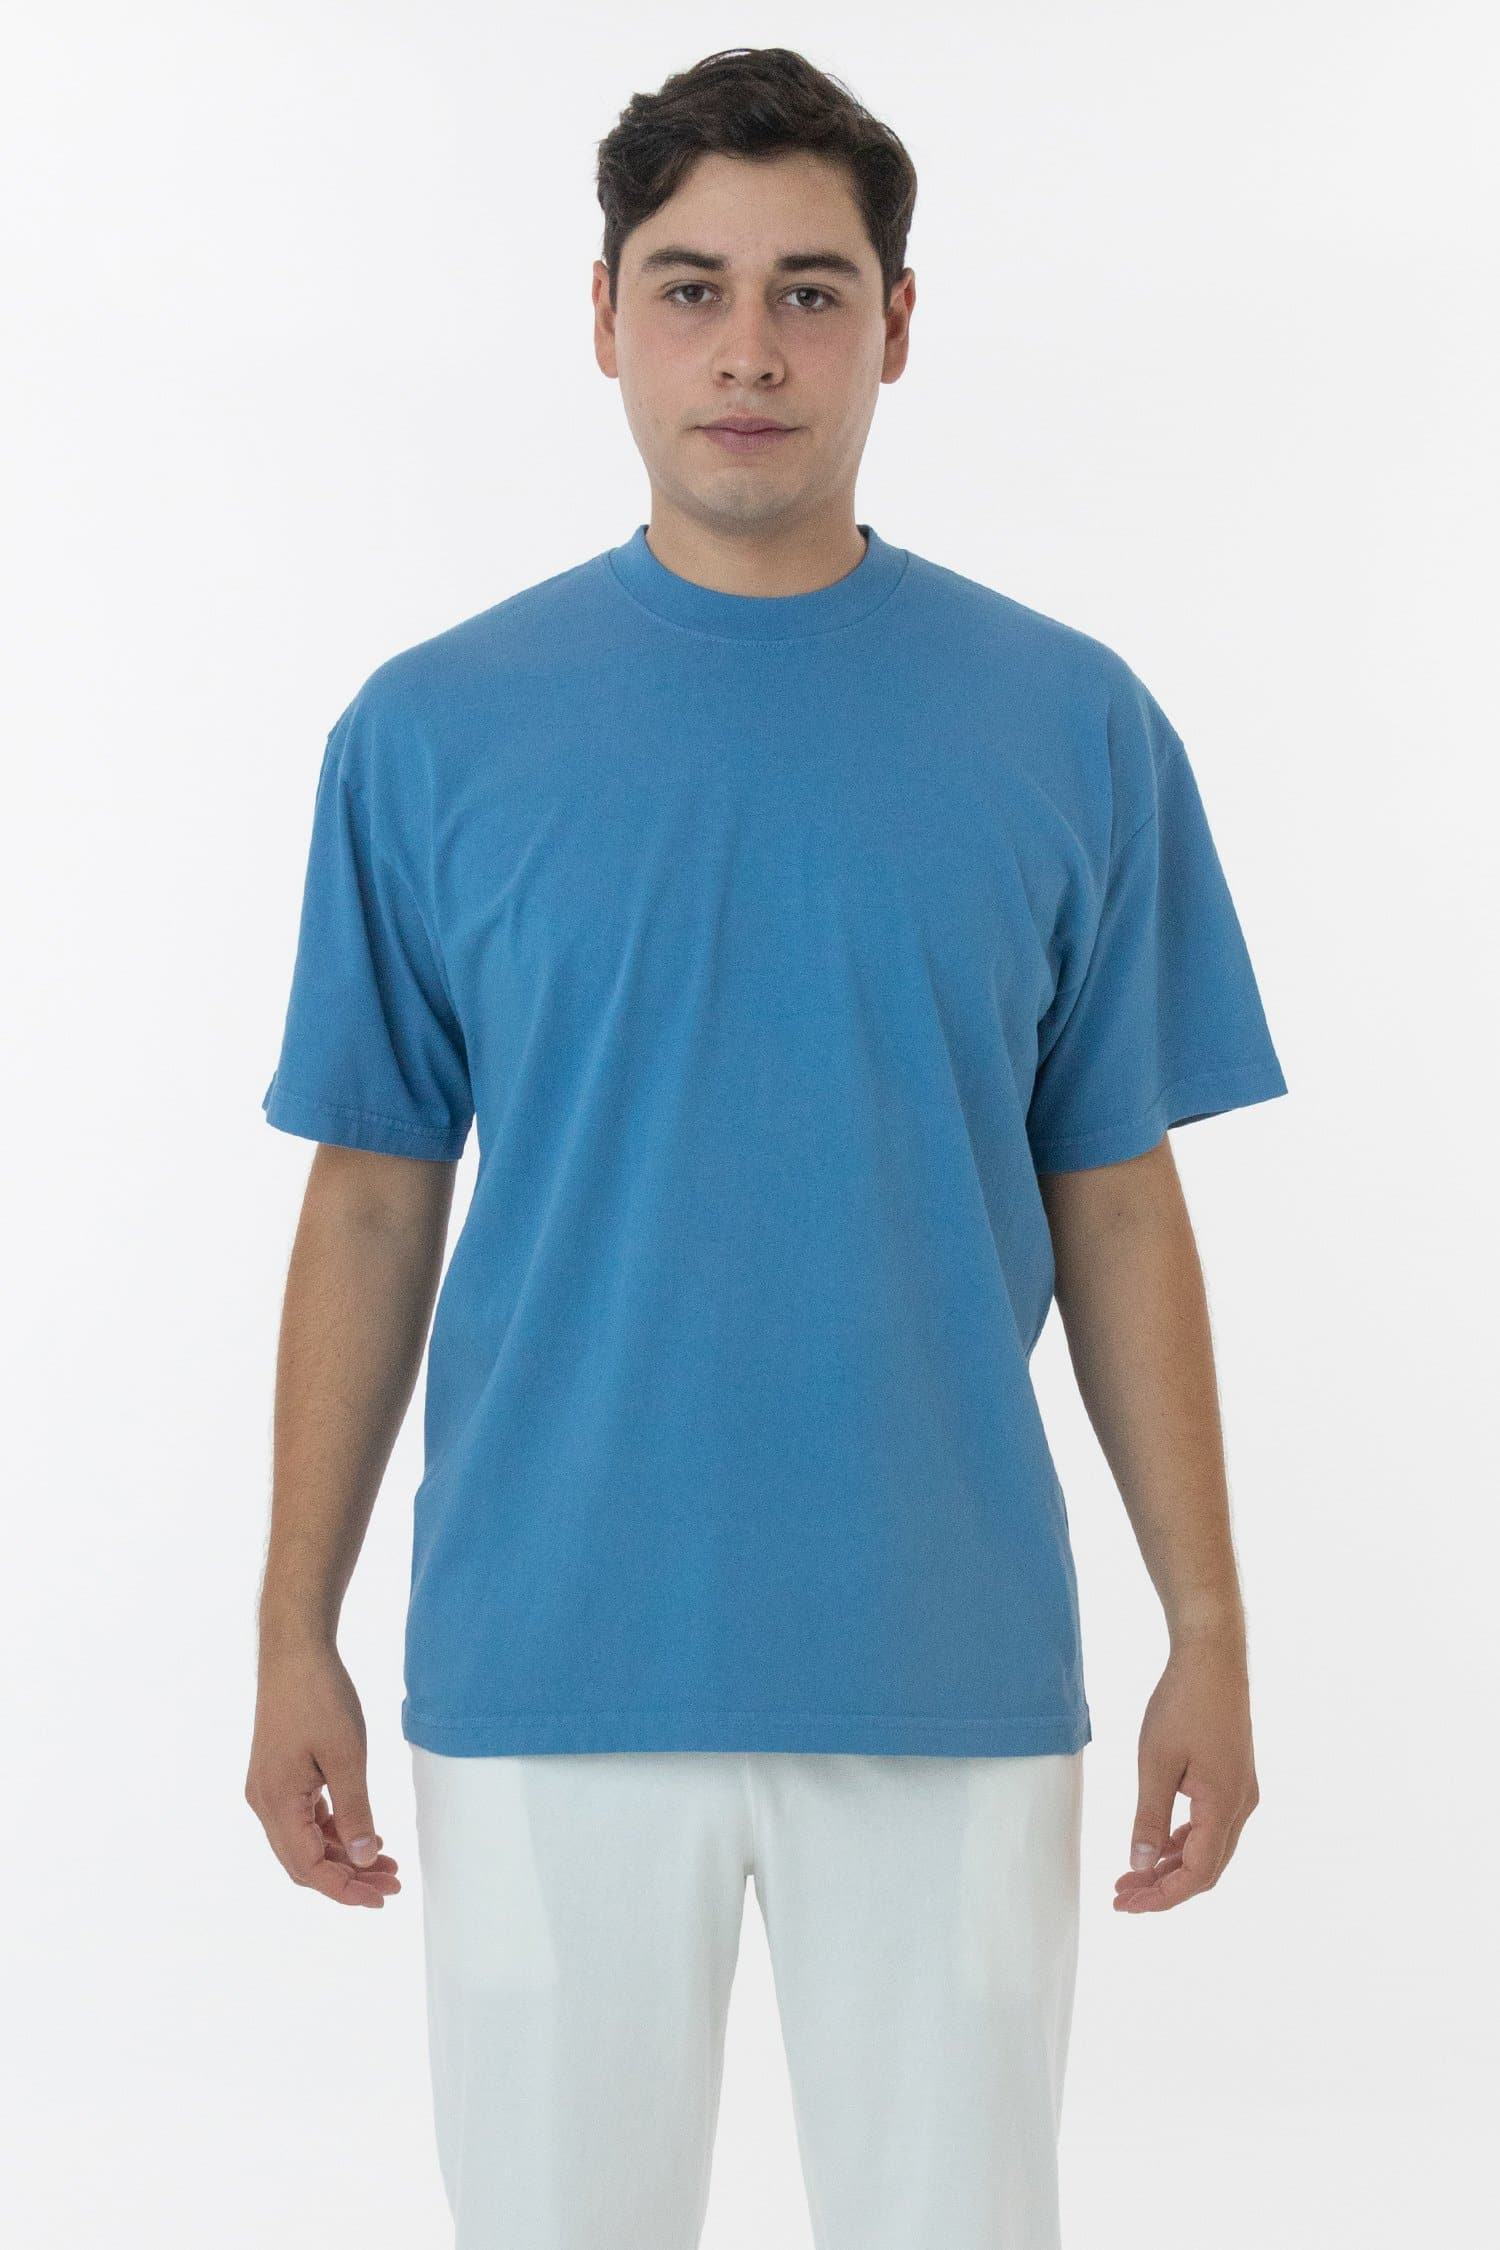 T-Shirt Crew Angeles 6.5oz Dye (Colors The - 1801 Apparel of Garment Los – 3) 1 Neck